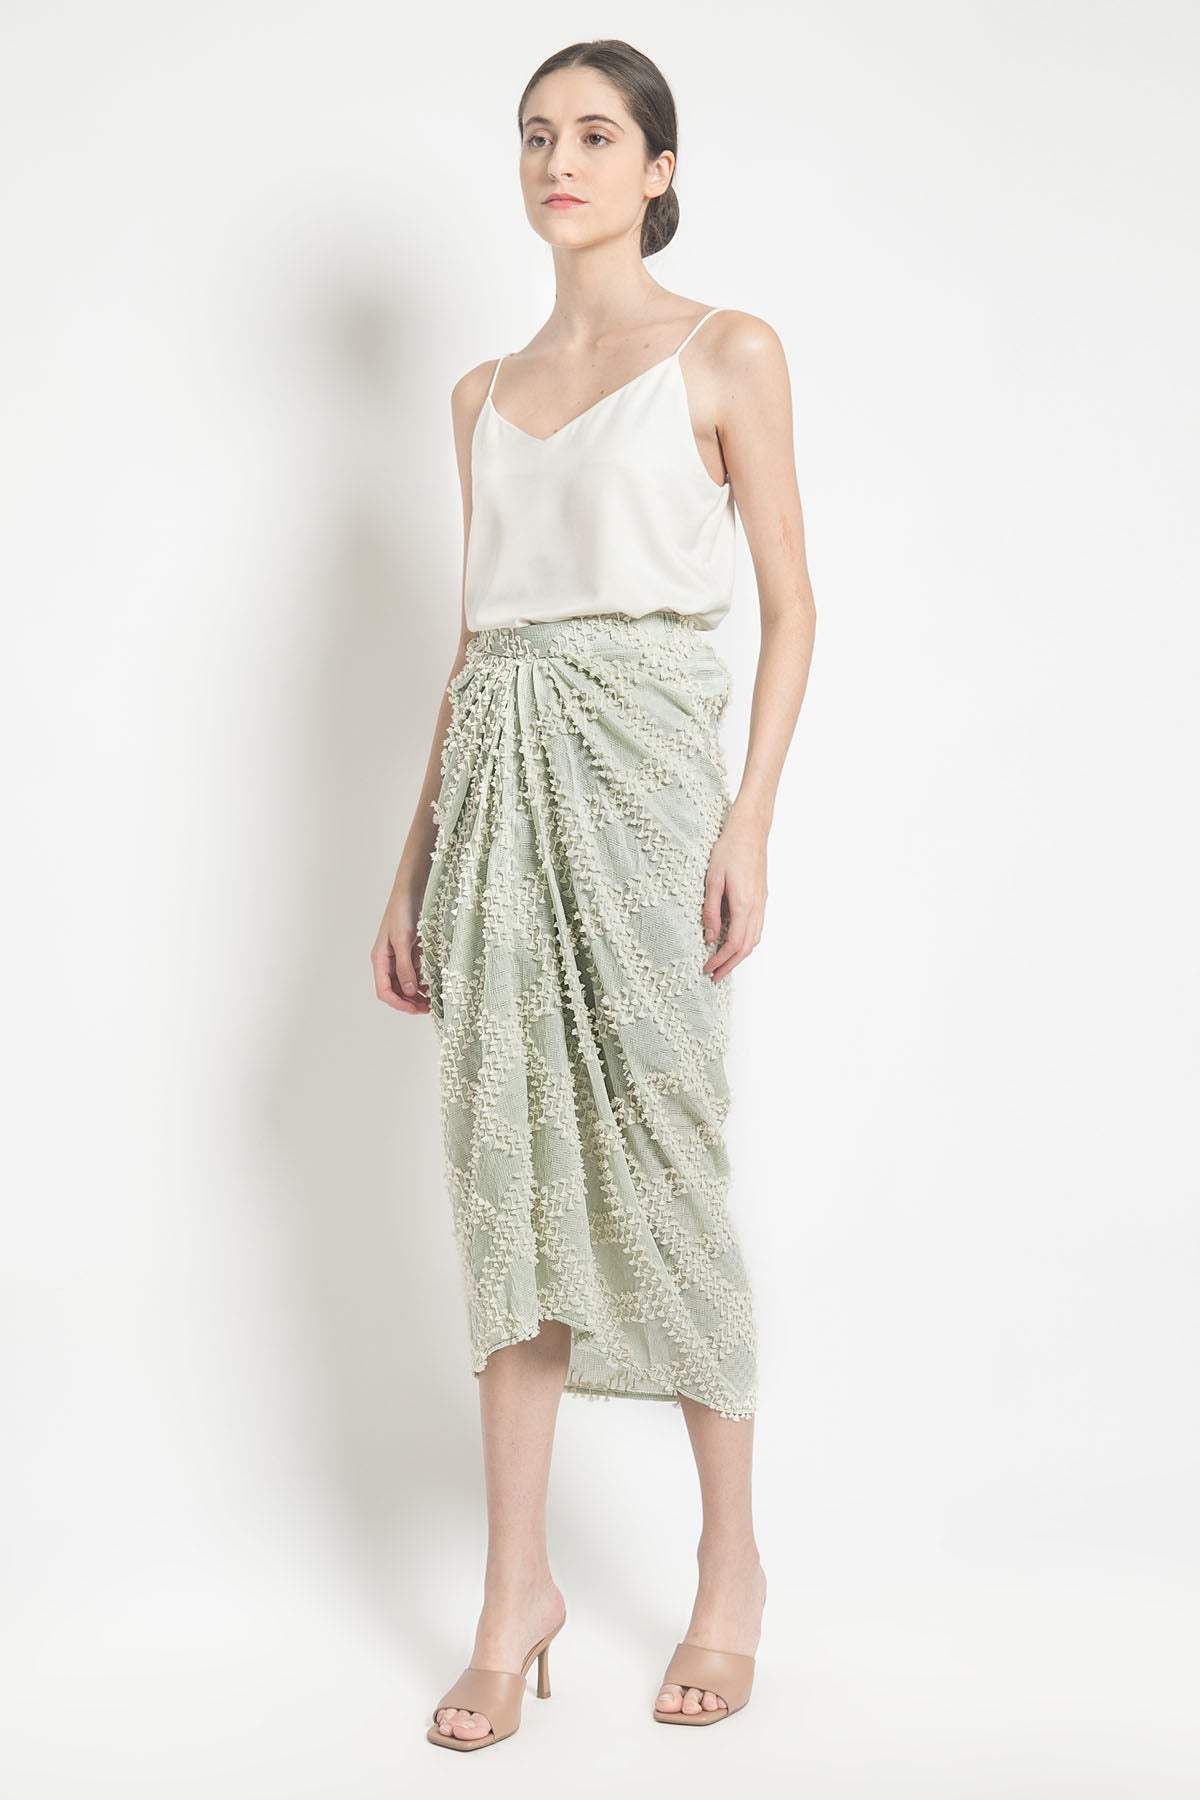 Colmar Skirt in Sage Green